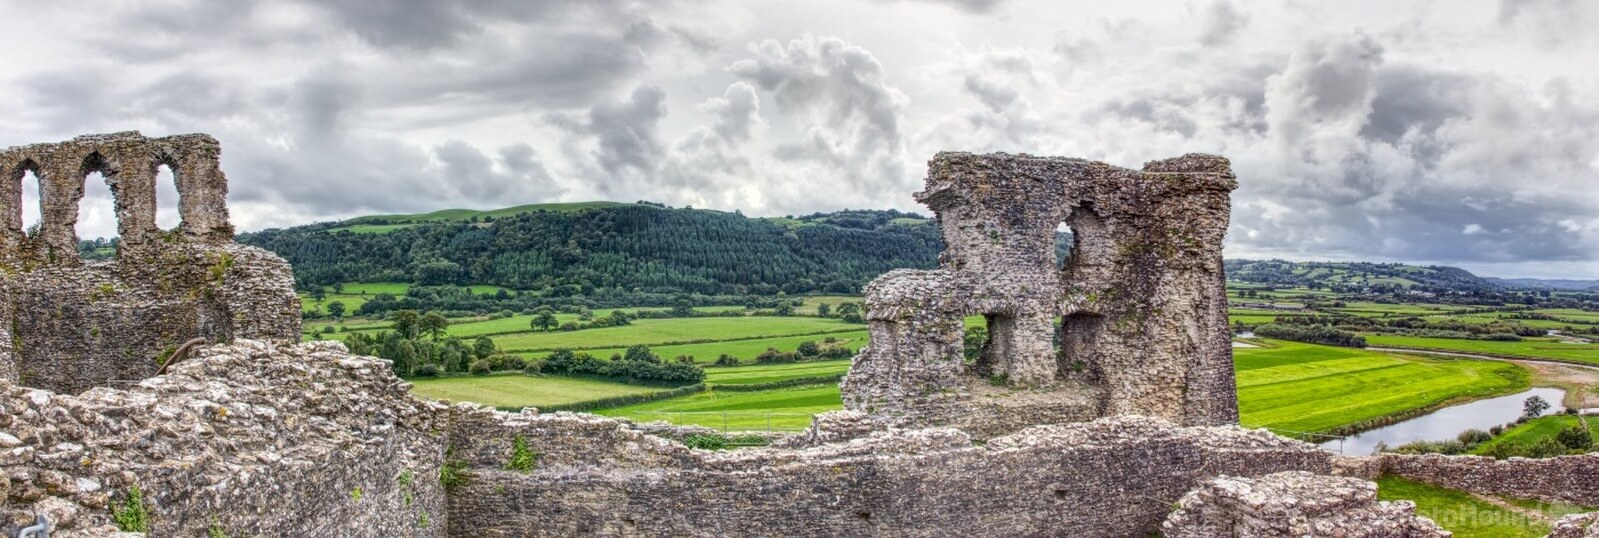 Image of Dryslwyn Castle by Nigel Thomas